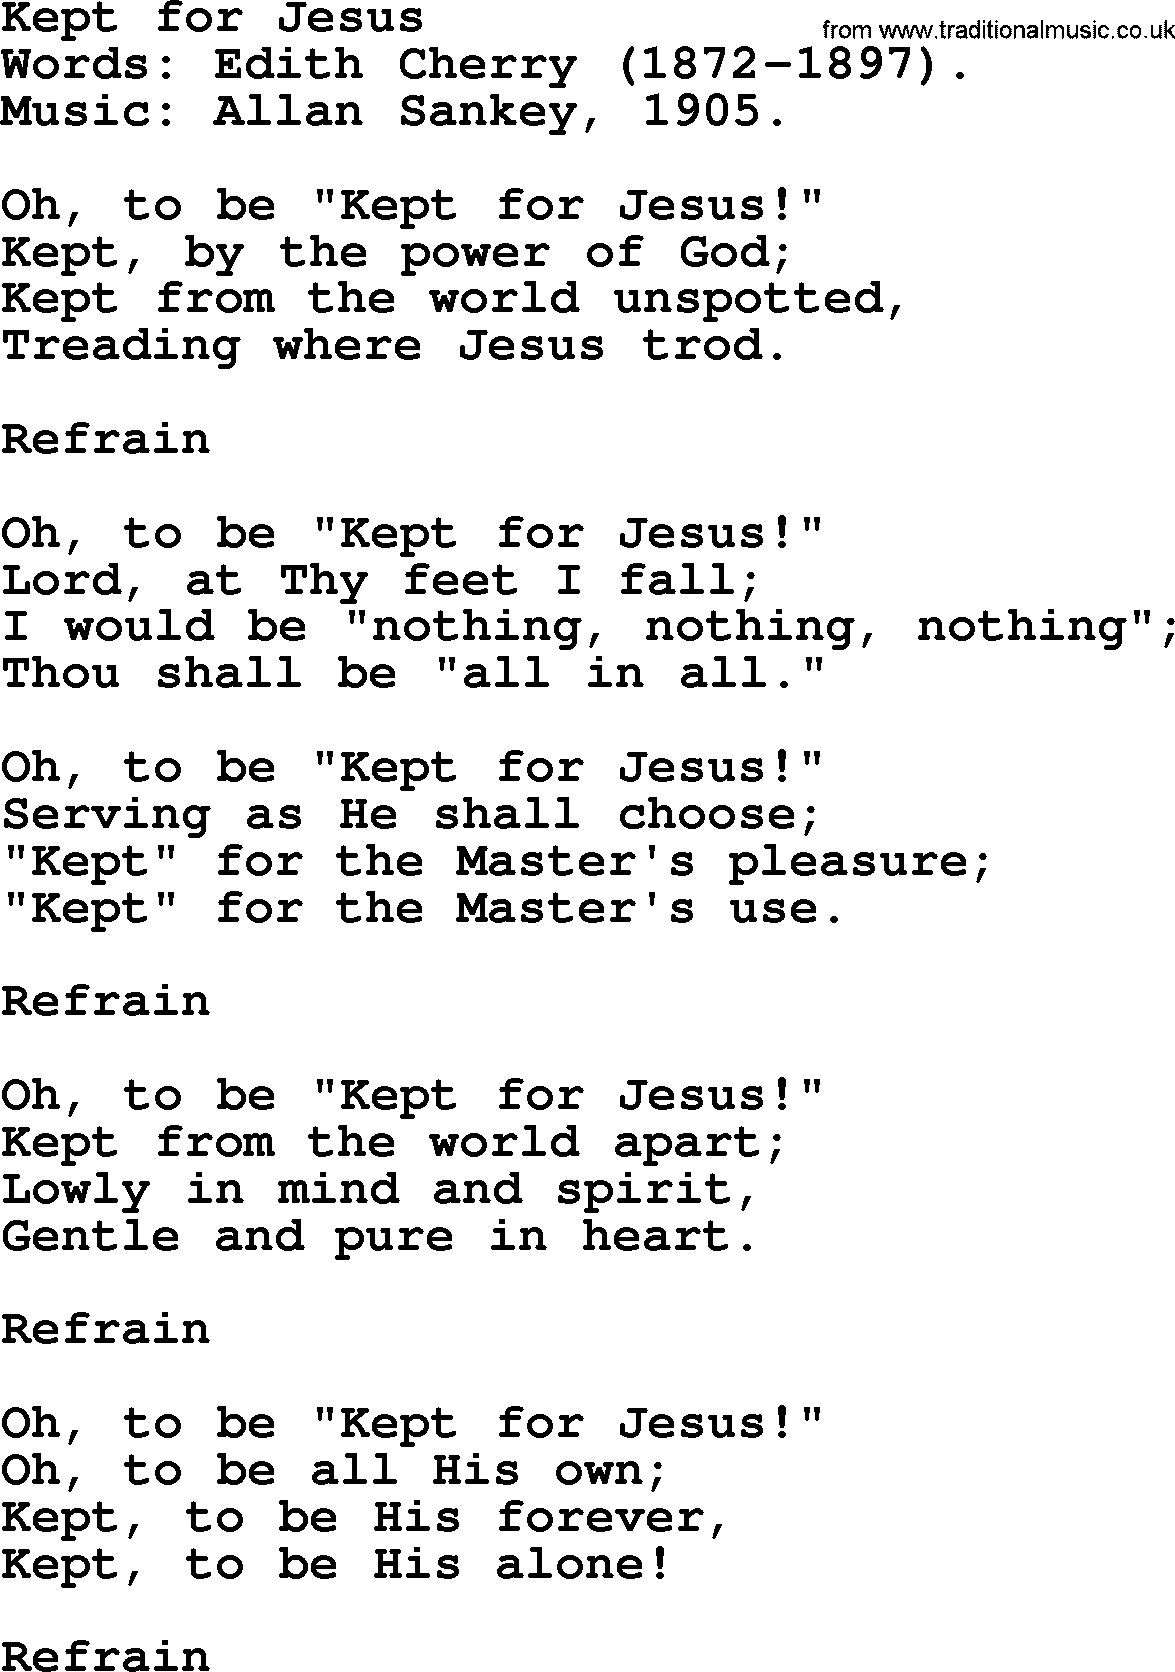 Ira Sankey hymn: Kept for Jesus-Ira Sankey, lyrics